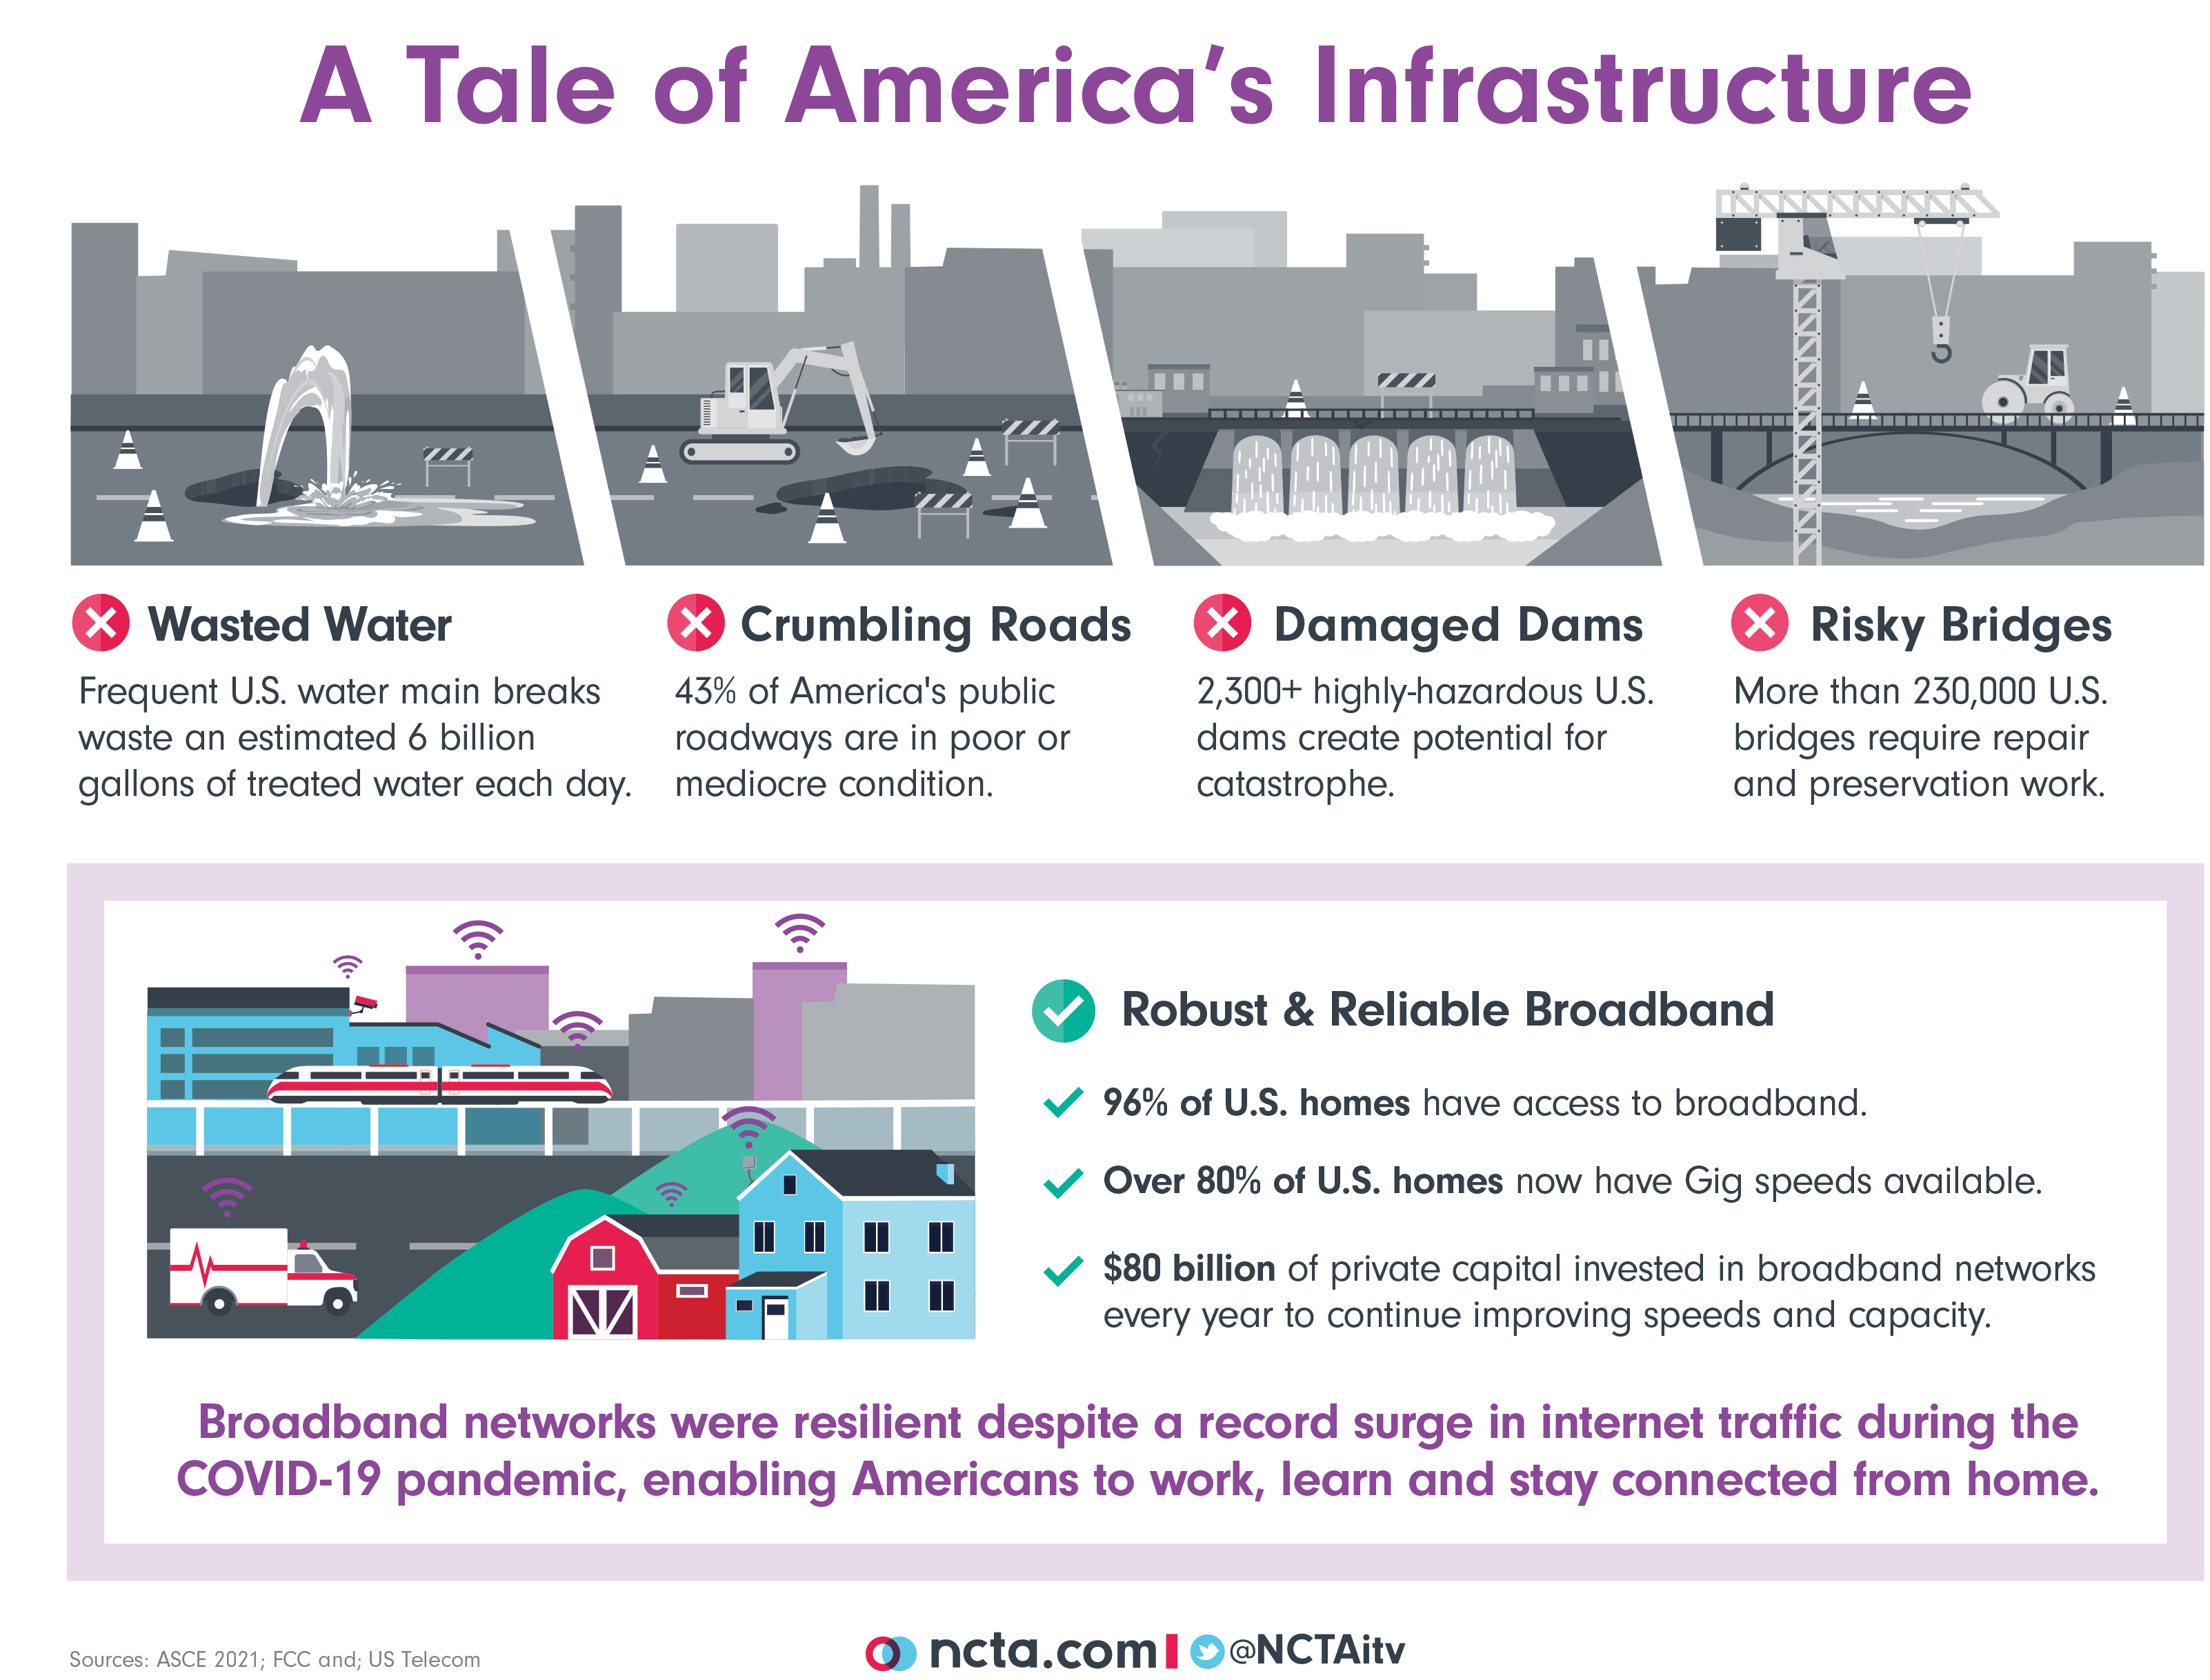 America's infrastructure